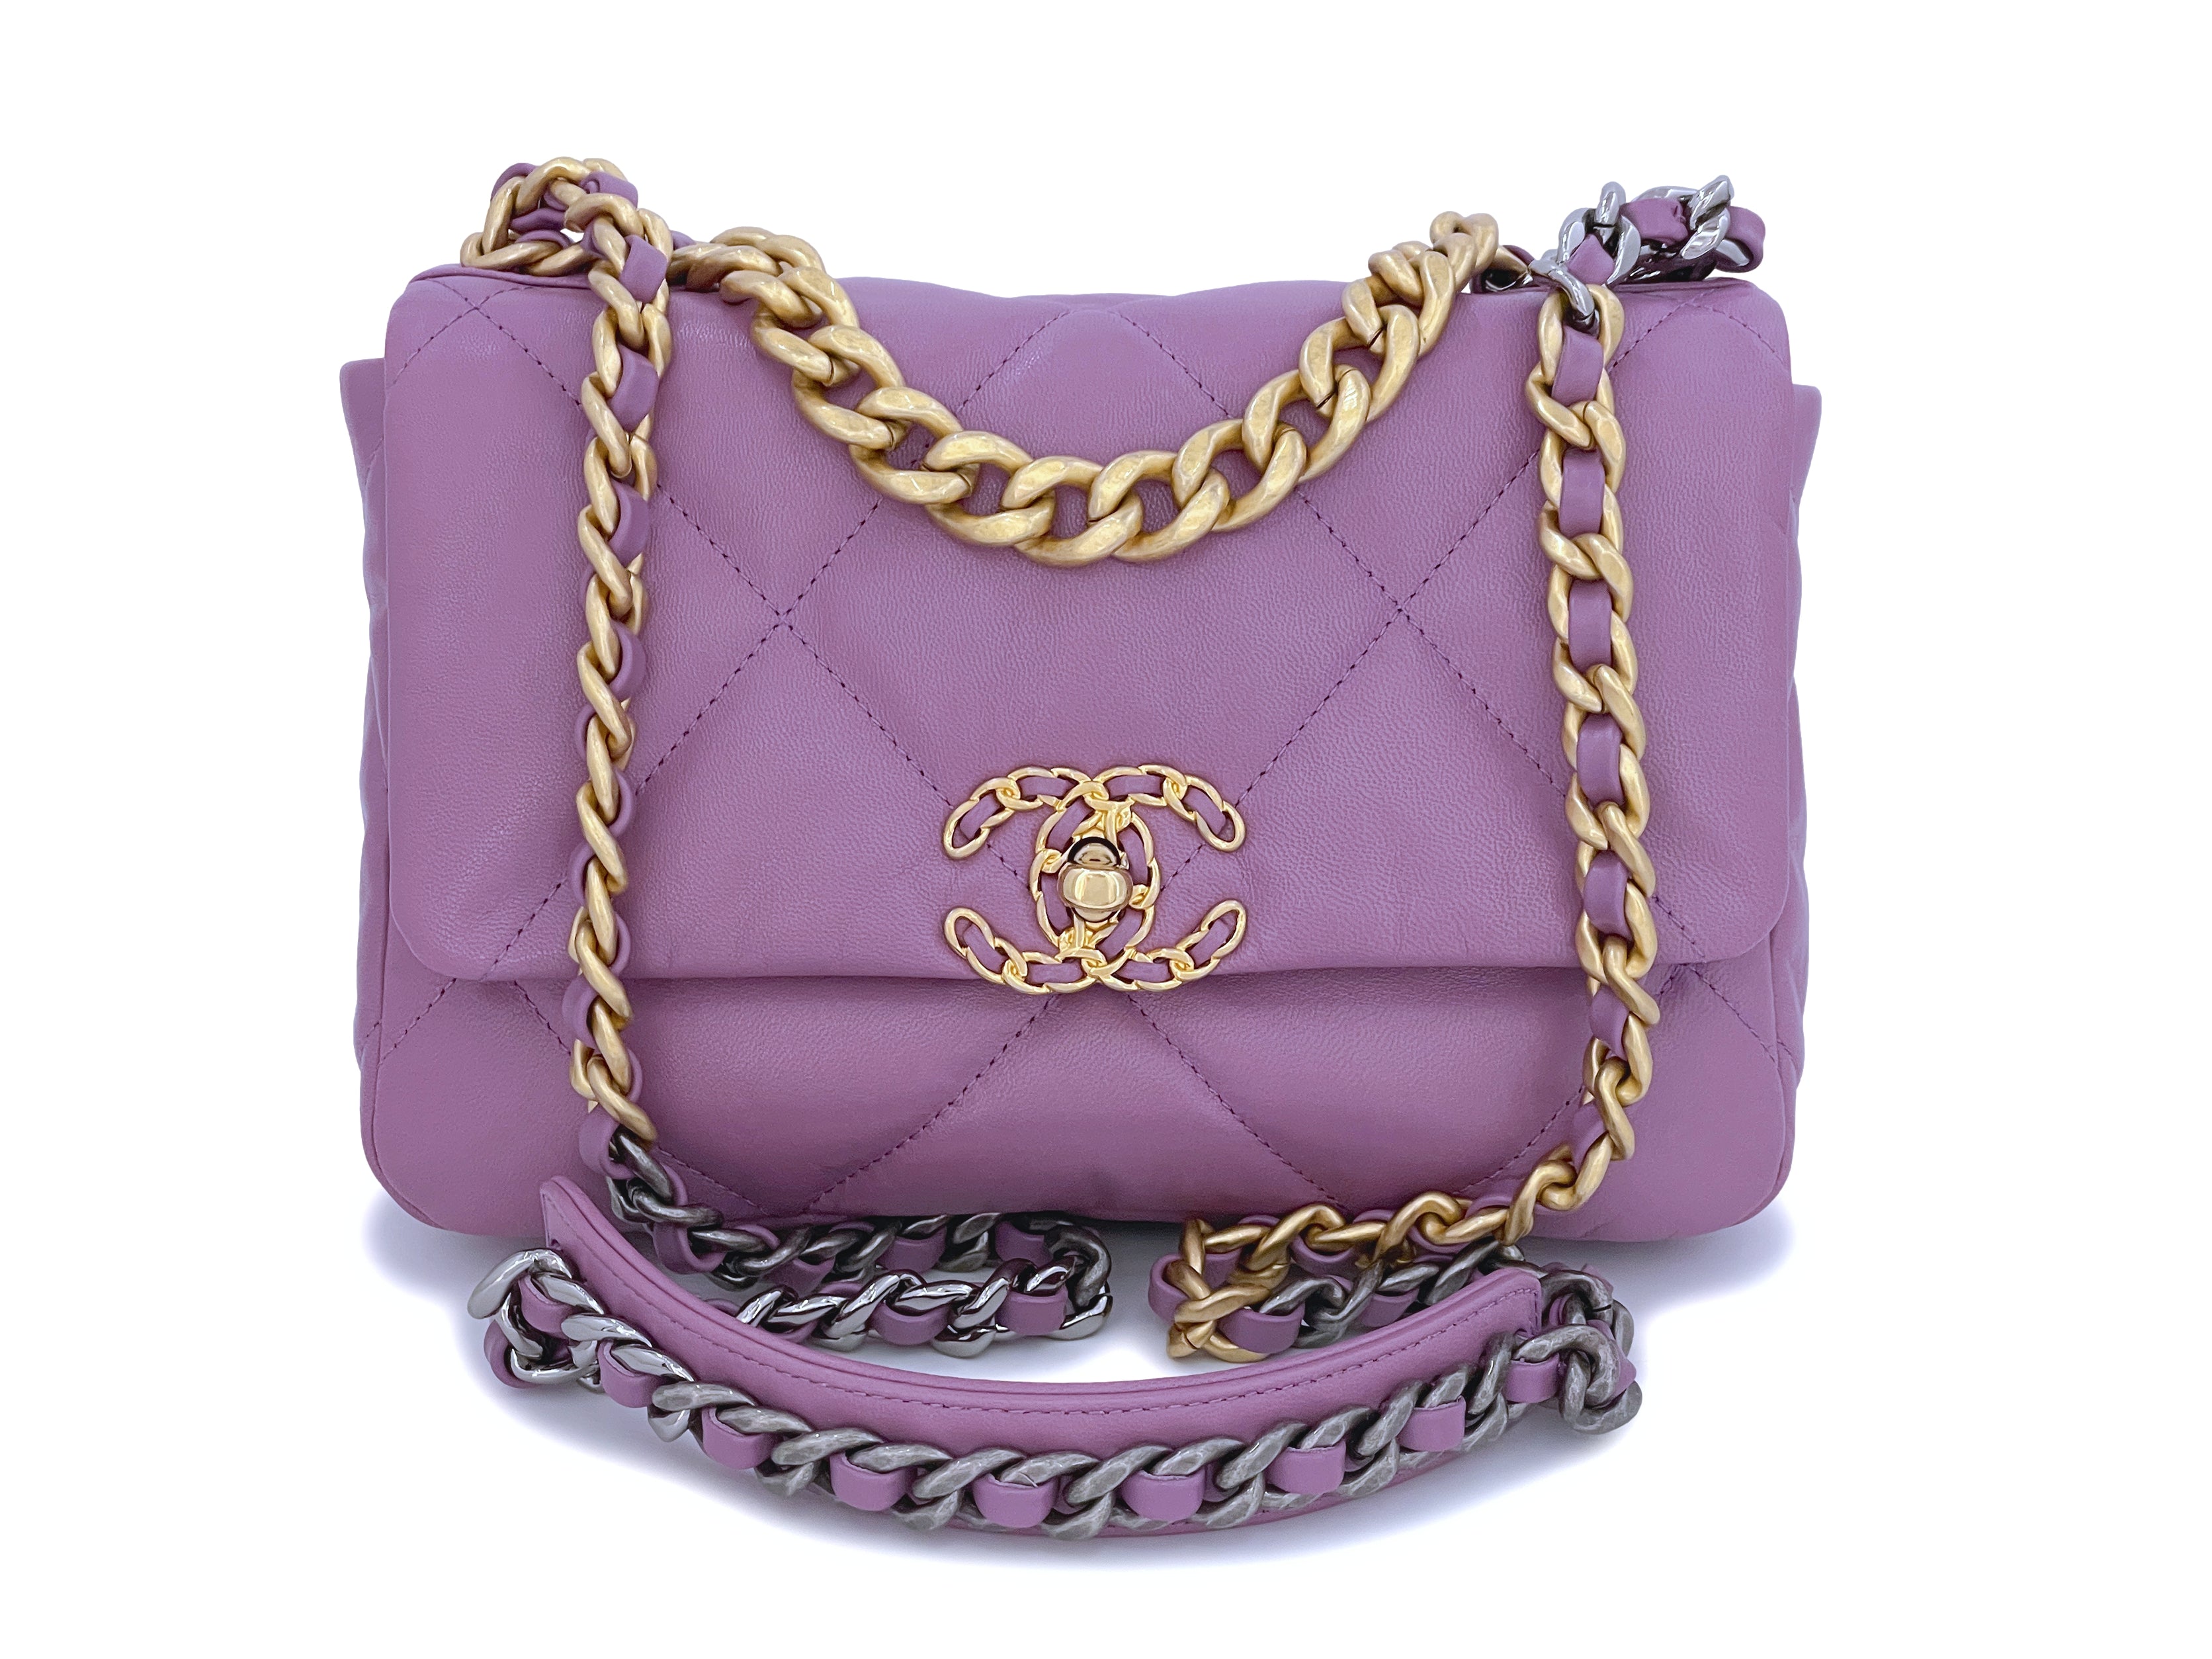 Chanel bag purple  Chanel bag, Chanel handbags, Louis vuitton bag